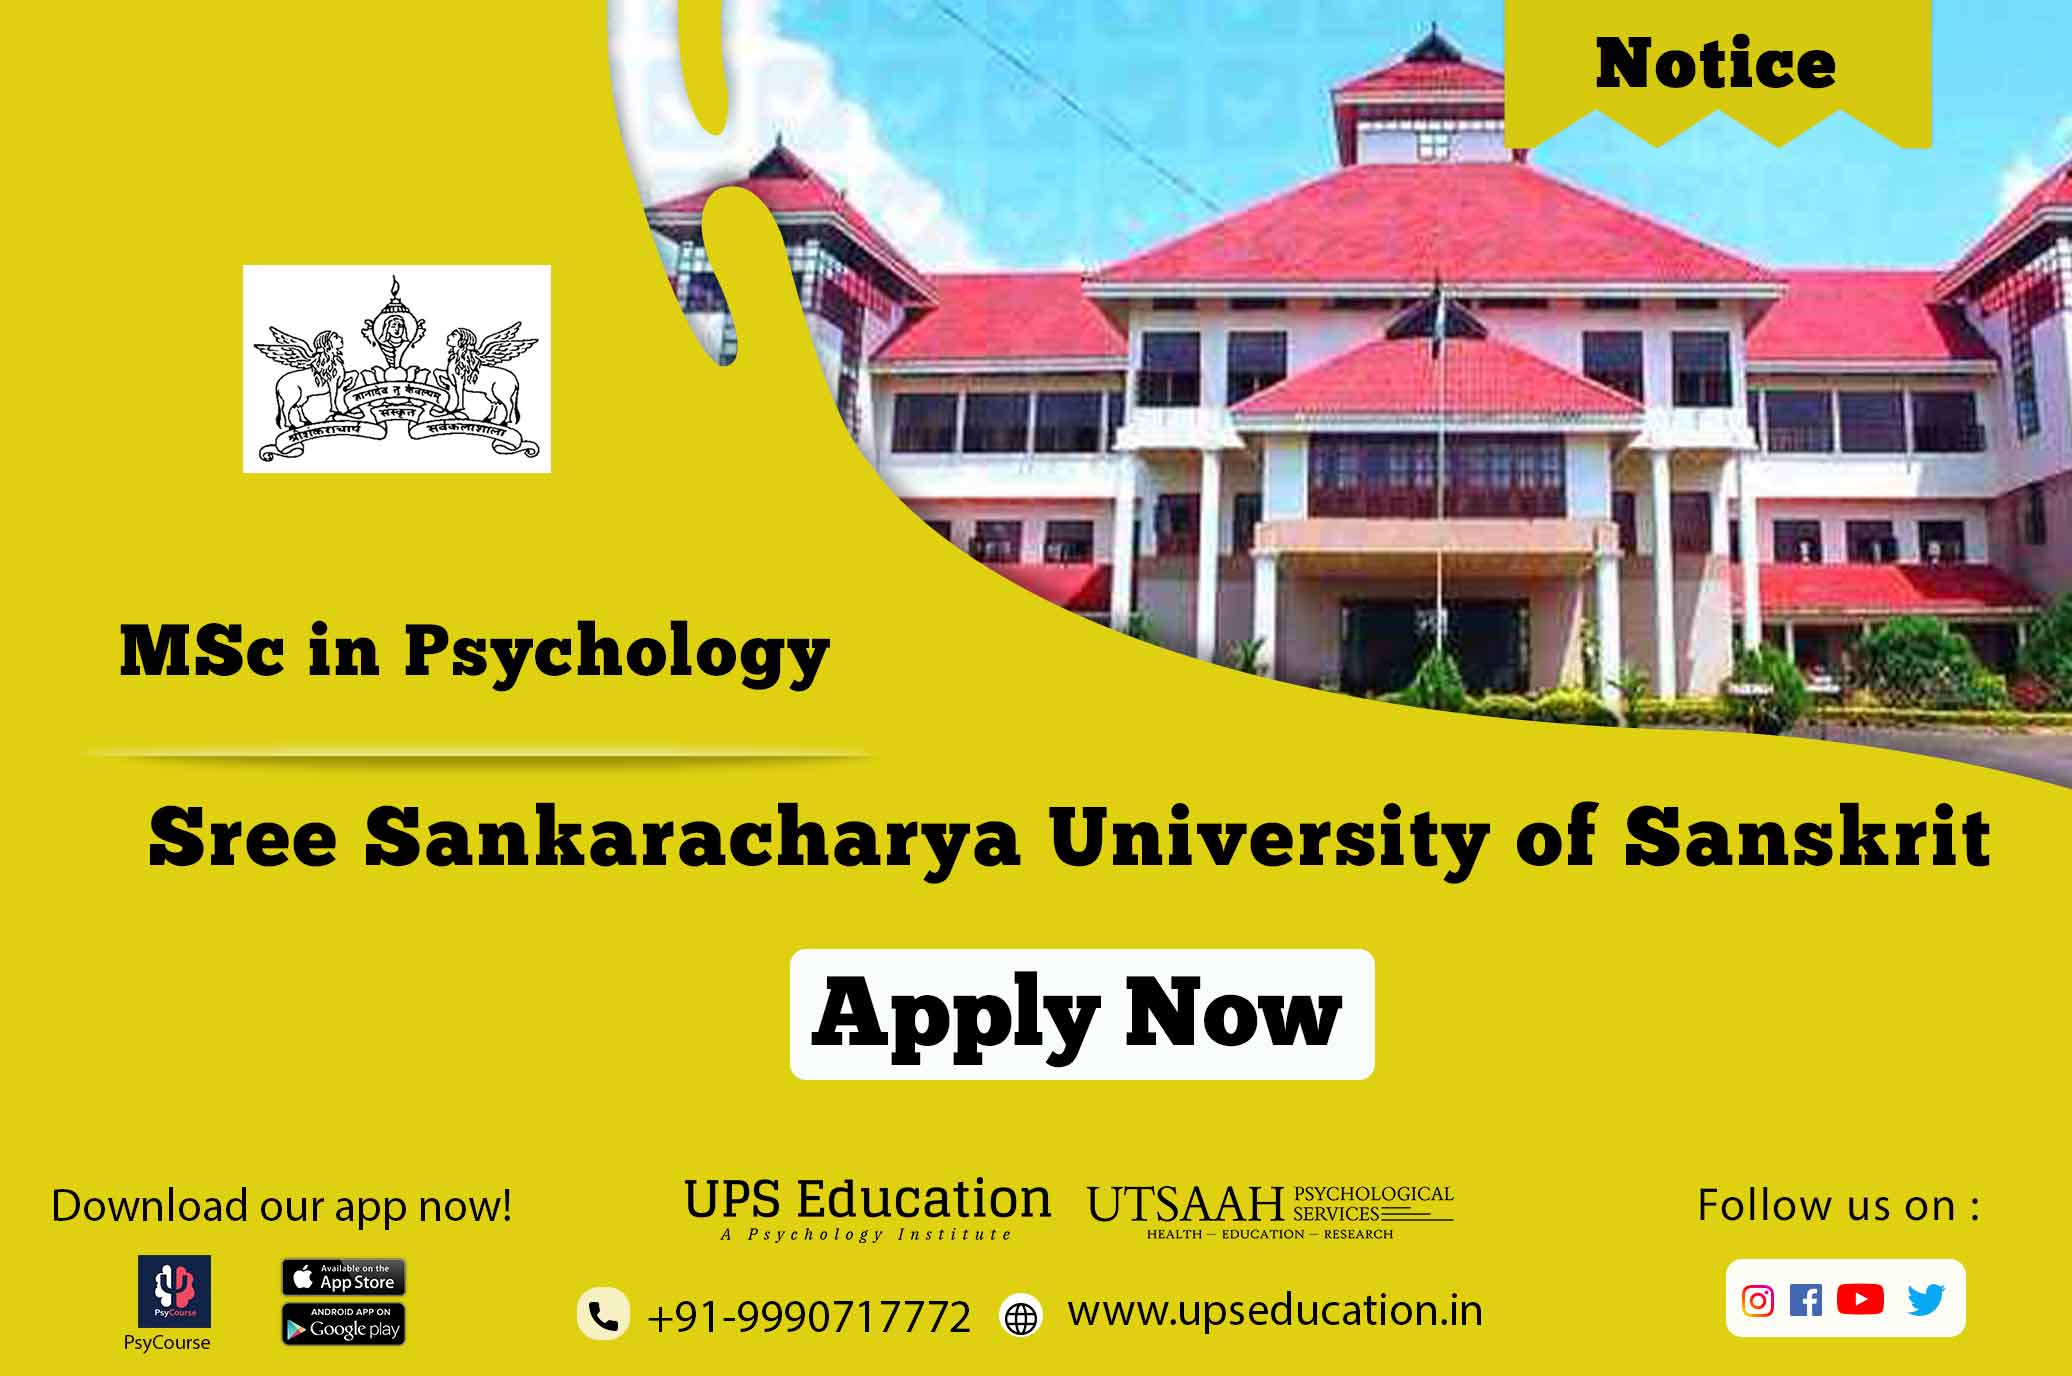 Sree Sankarachary University of Sanskrit, Kalady MSC in Psychology